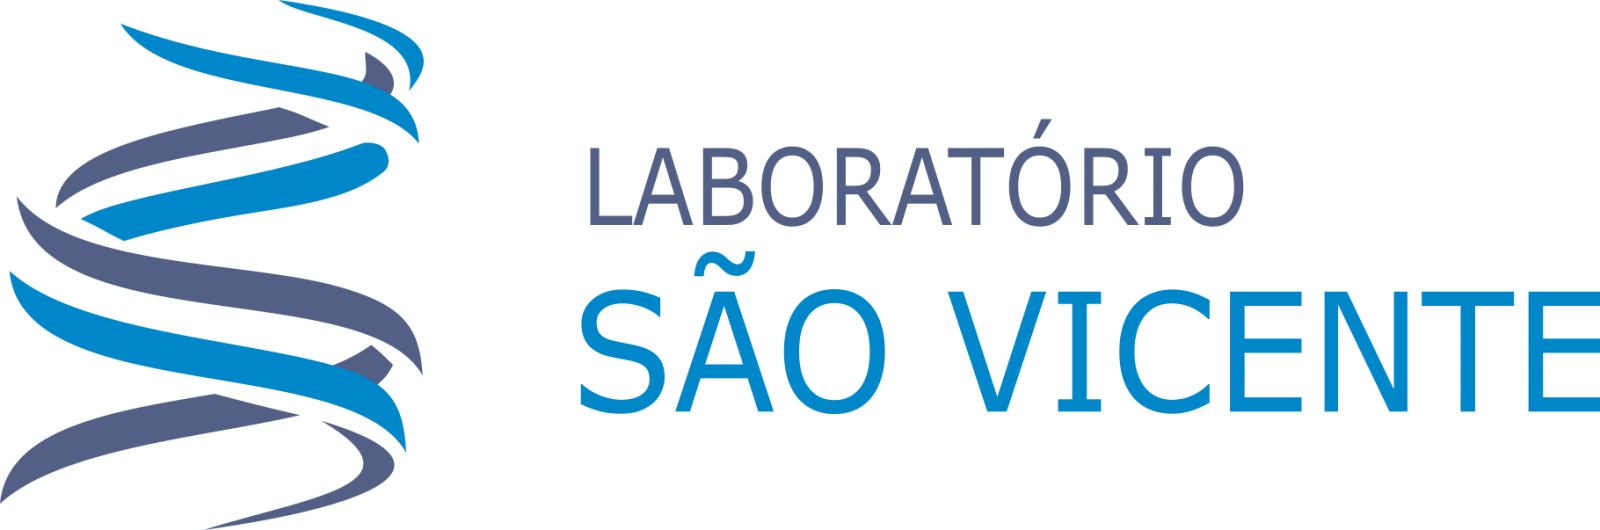 Laboratório São Vicente